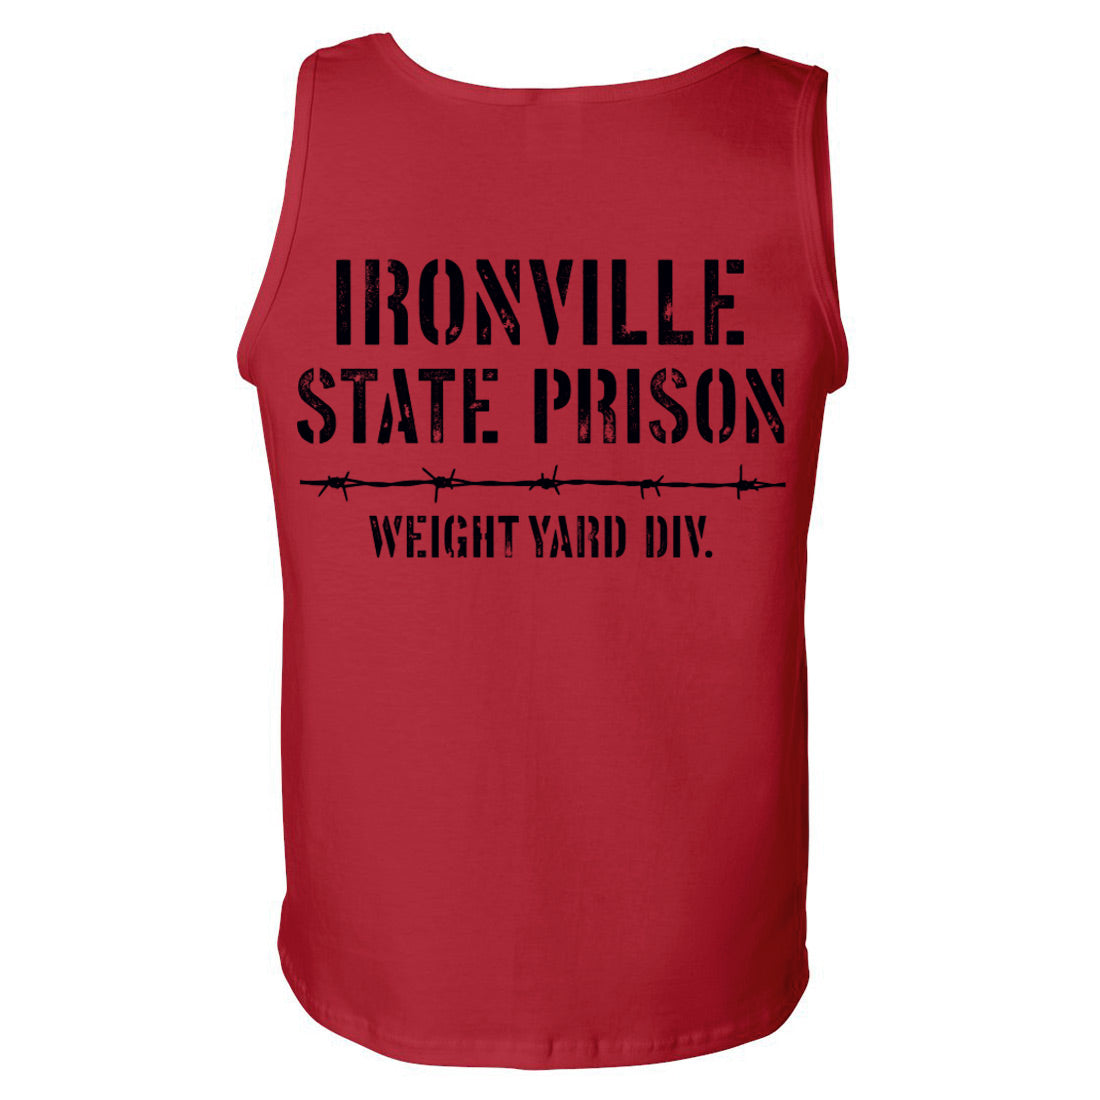 Ironville STATE PRISON Standard Cut Gym Tank Top